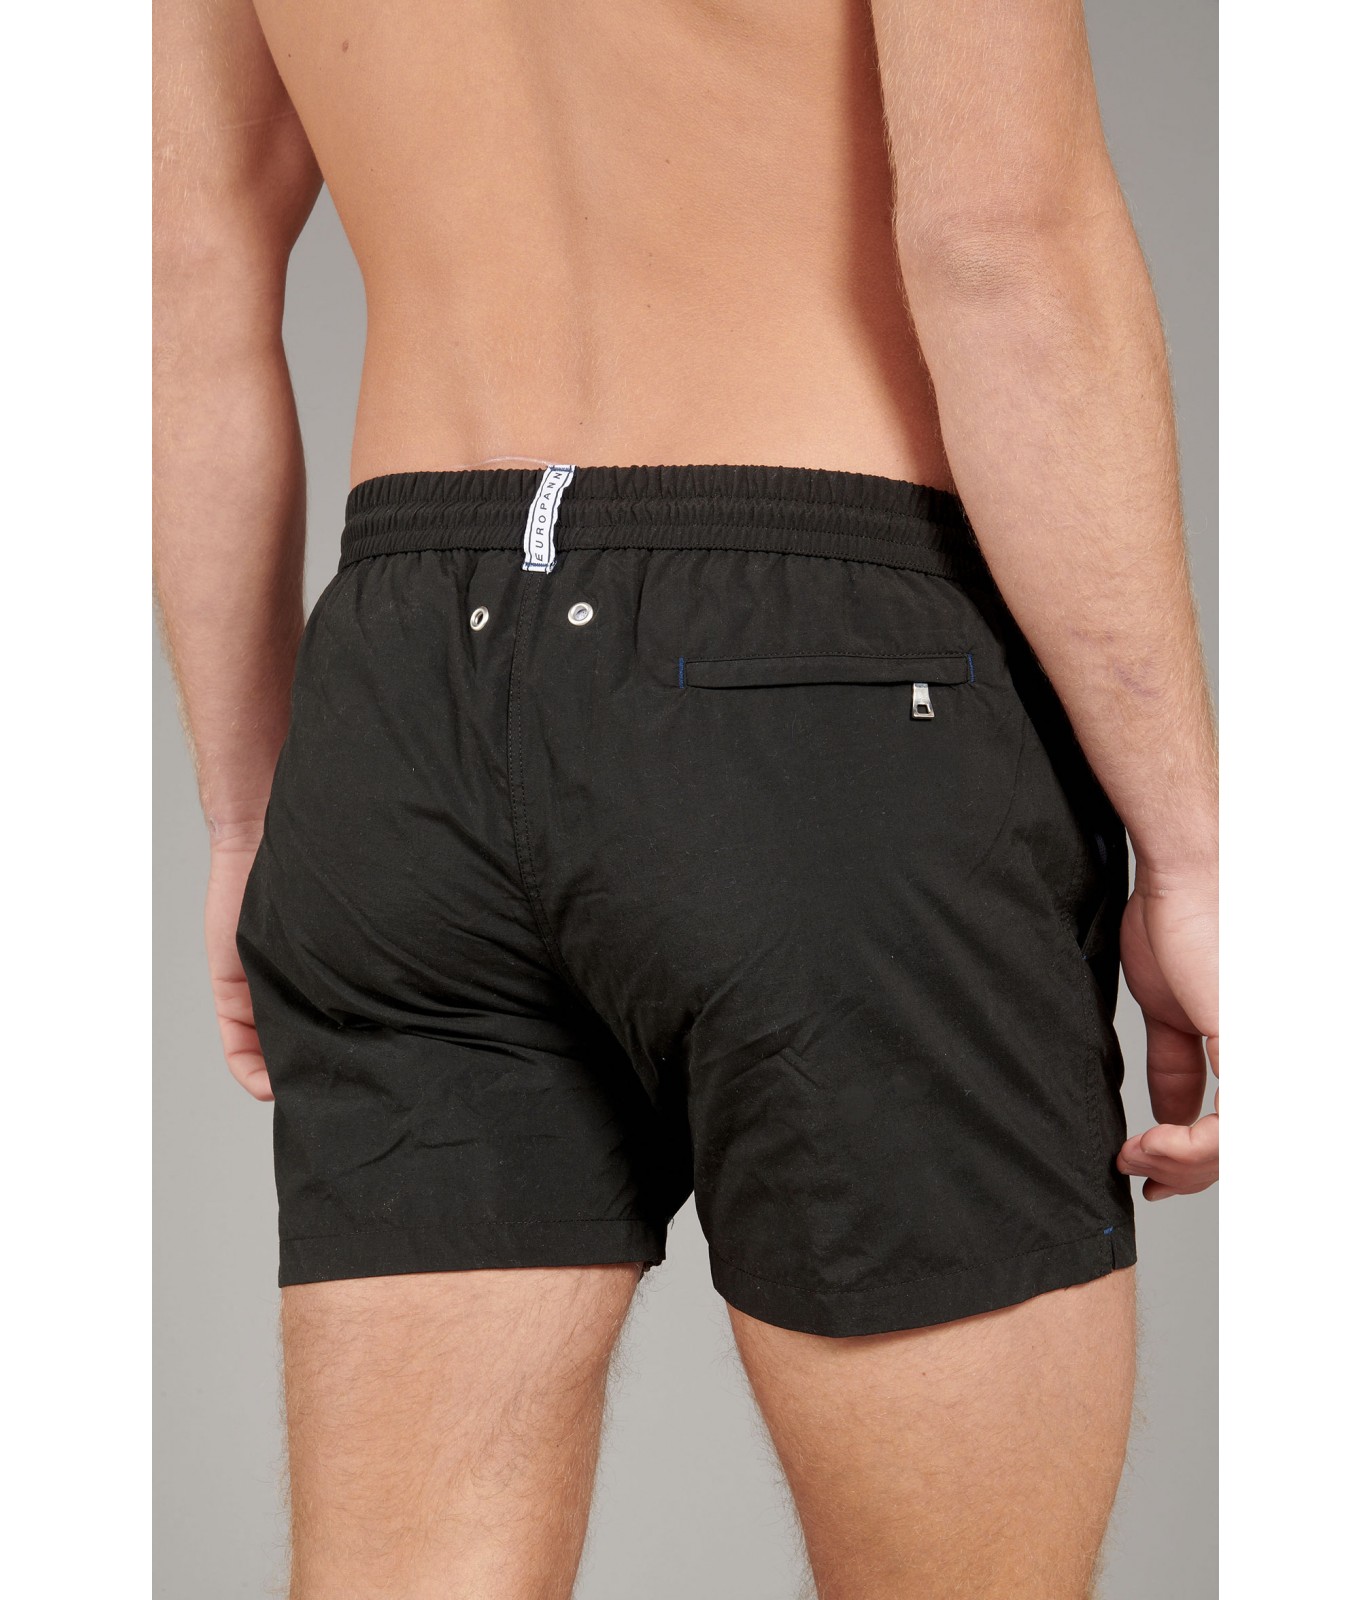 https://www.europann.com/9086-thickbox_default/soft-plain-black-swim-shorts.jpg